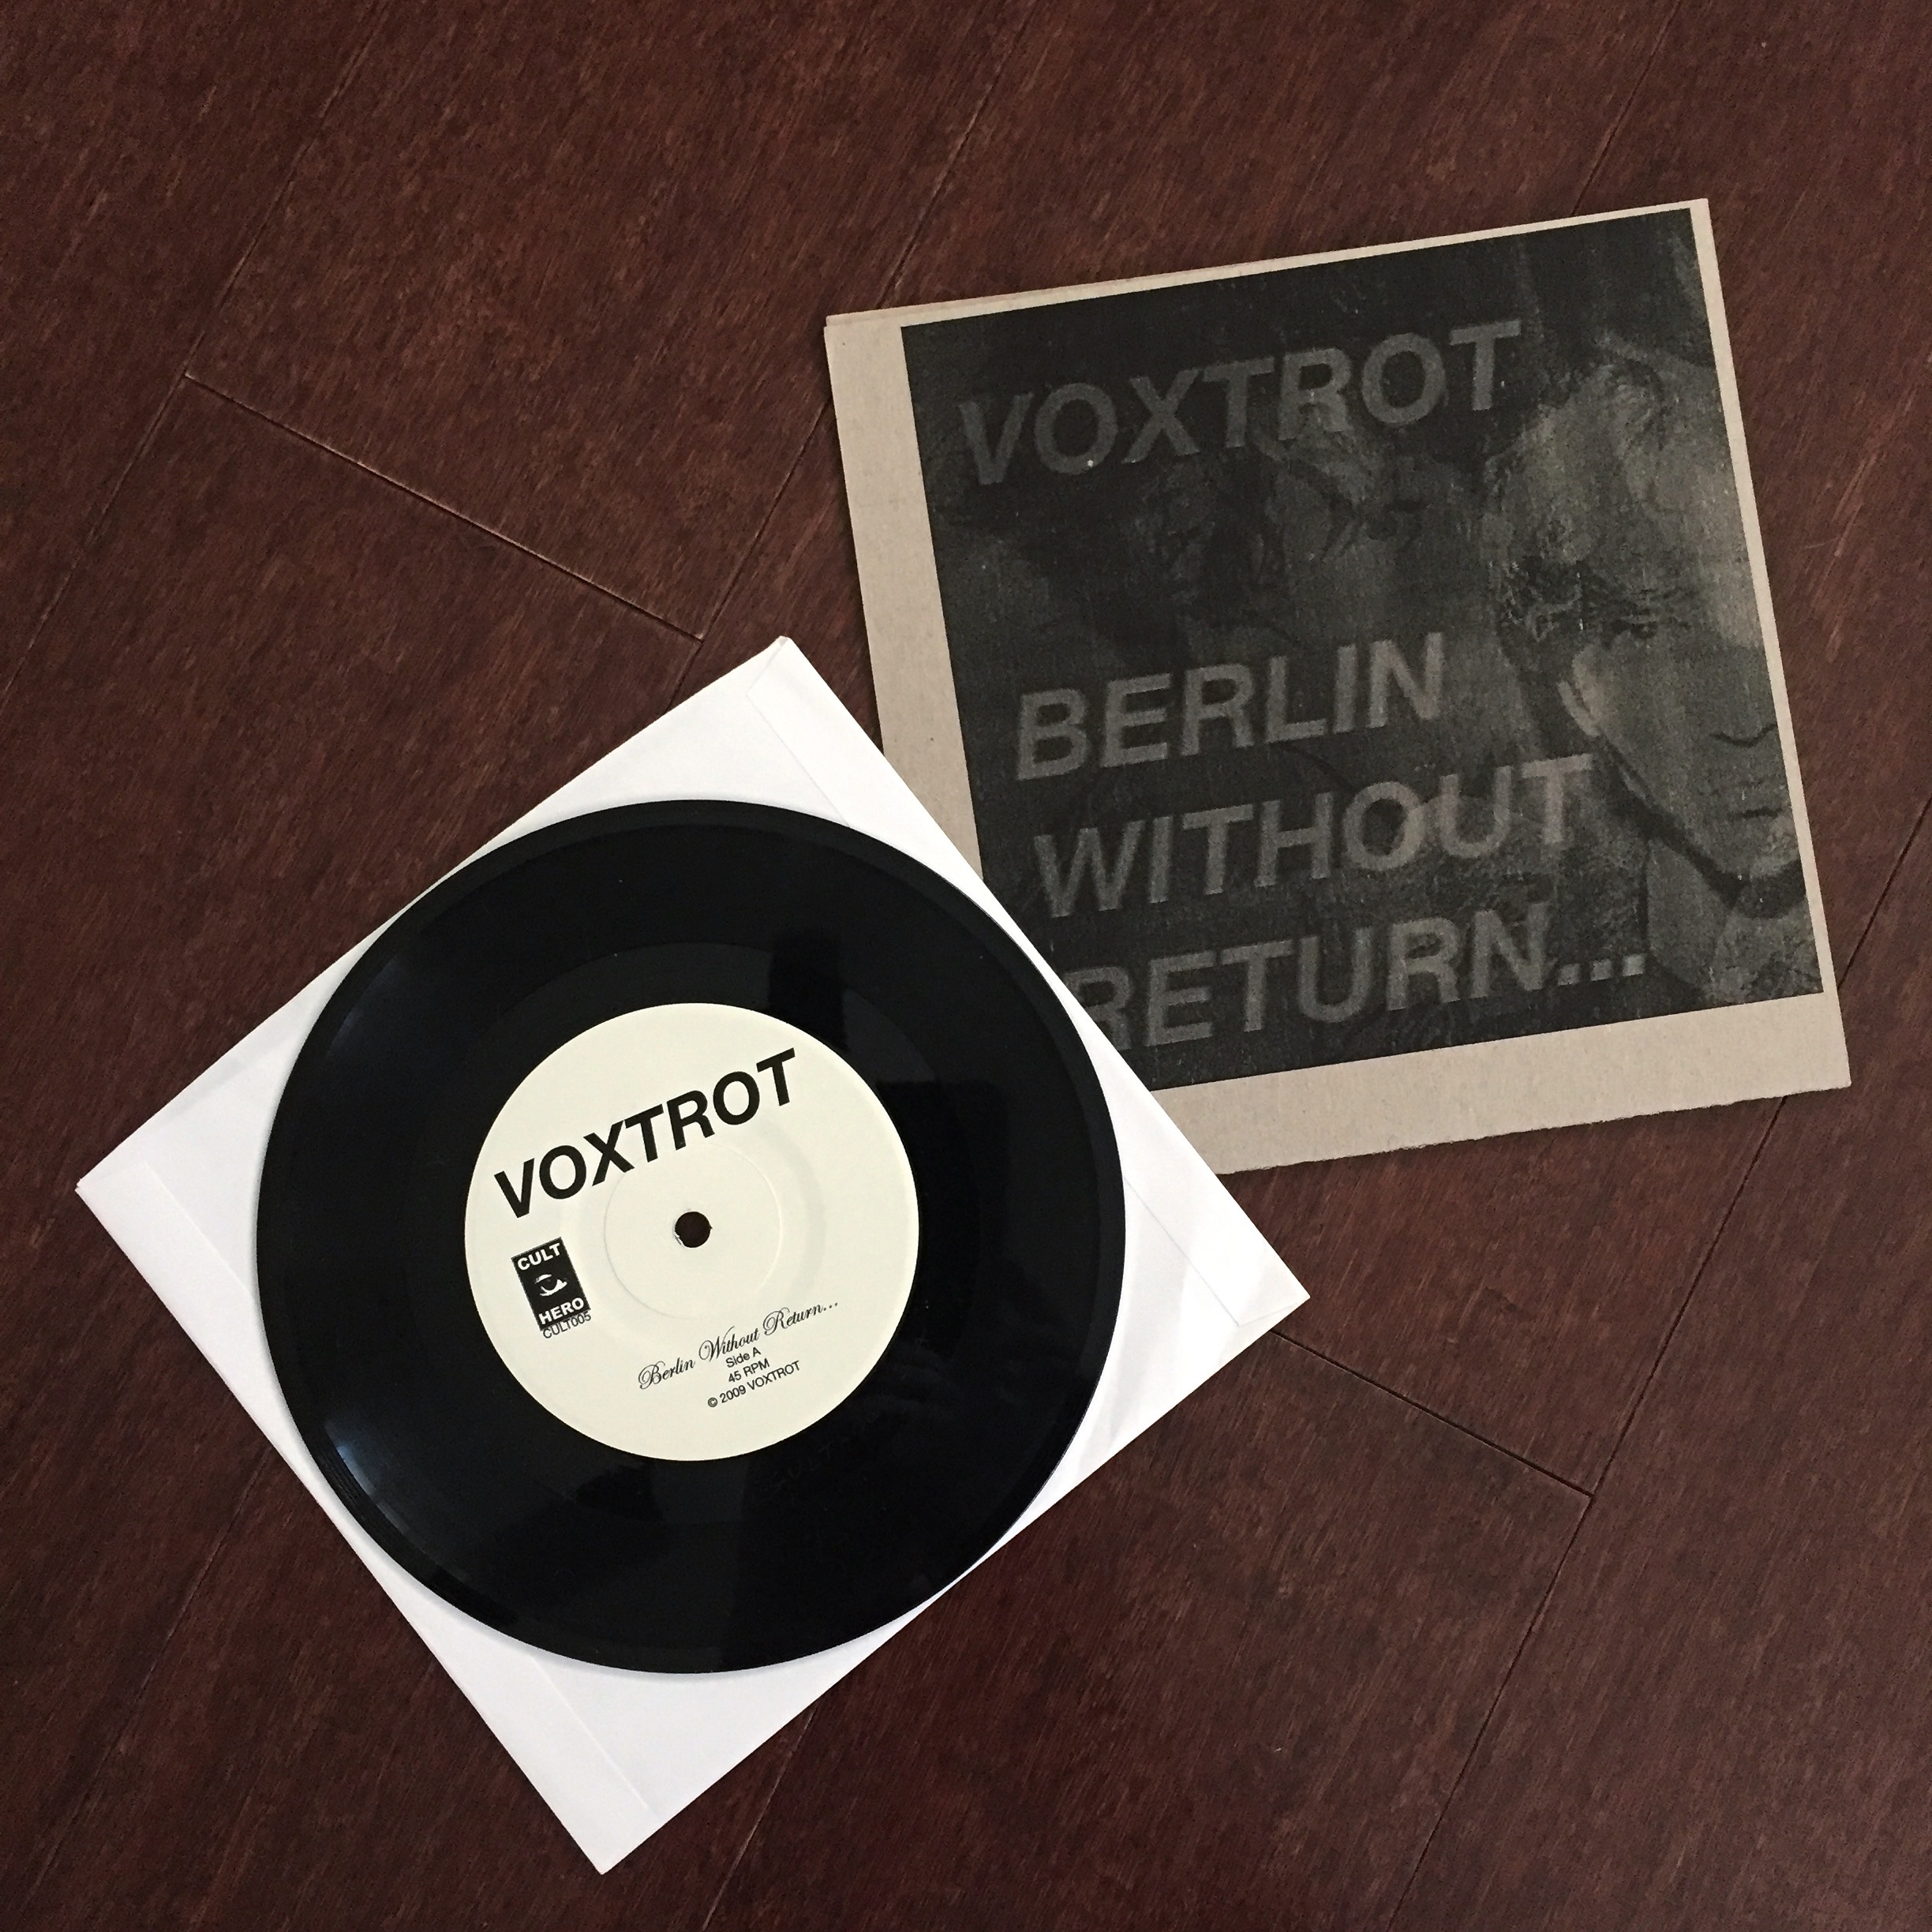 Voxtrot Berlin Without Return